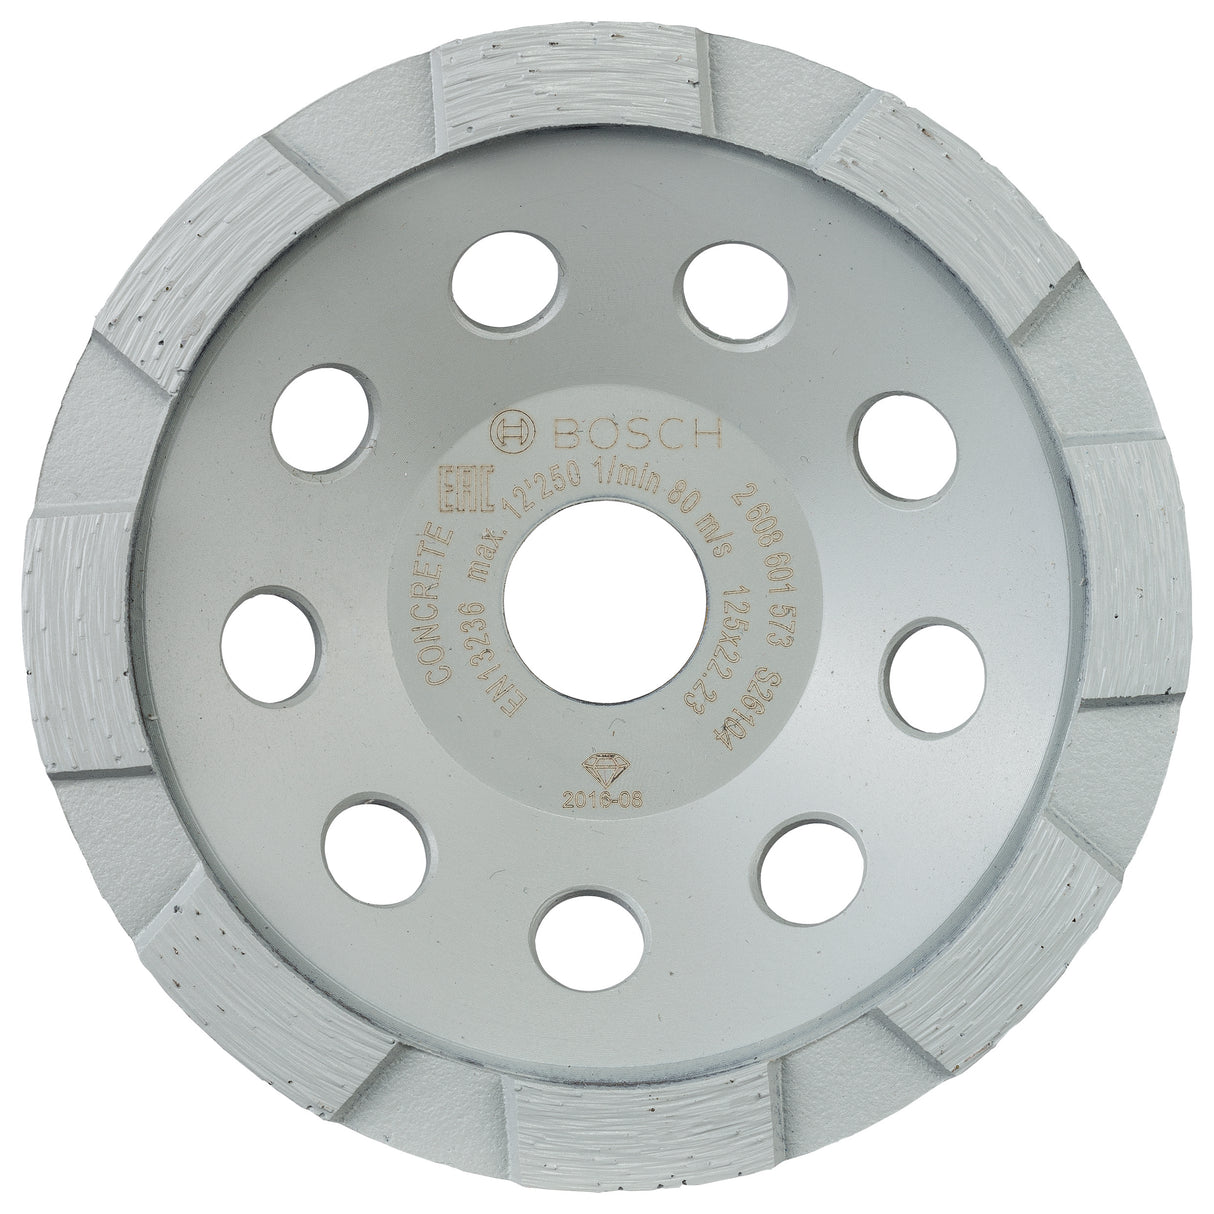 Bosch Professional Diamond Cup Wheel - Standard for Concrete - 125x22.23x5